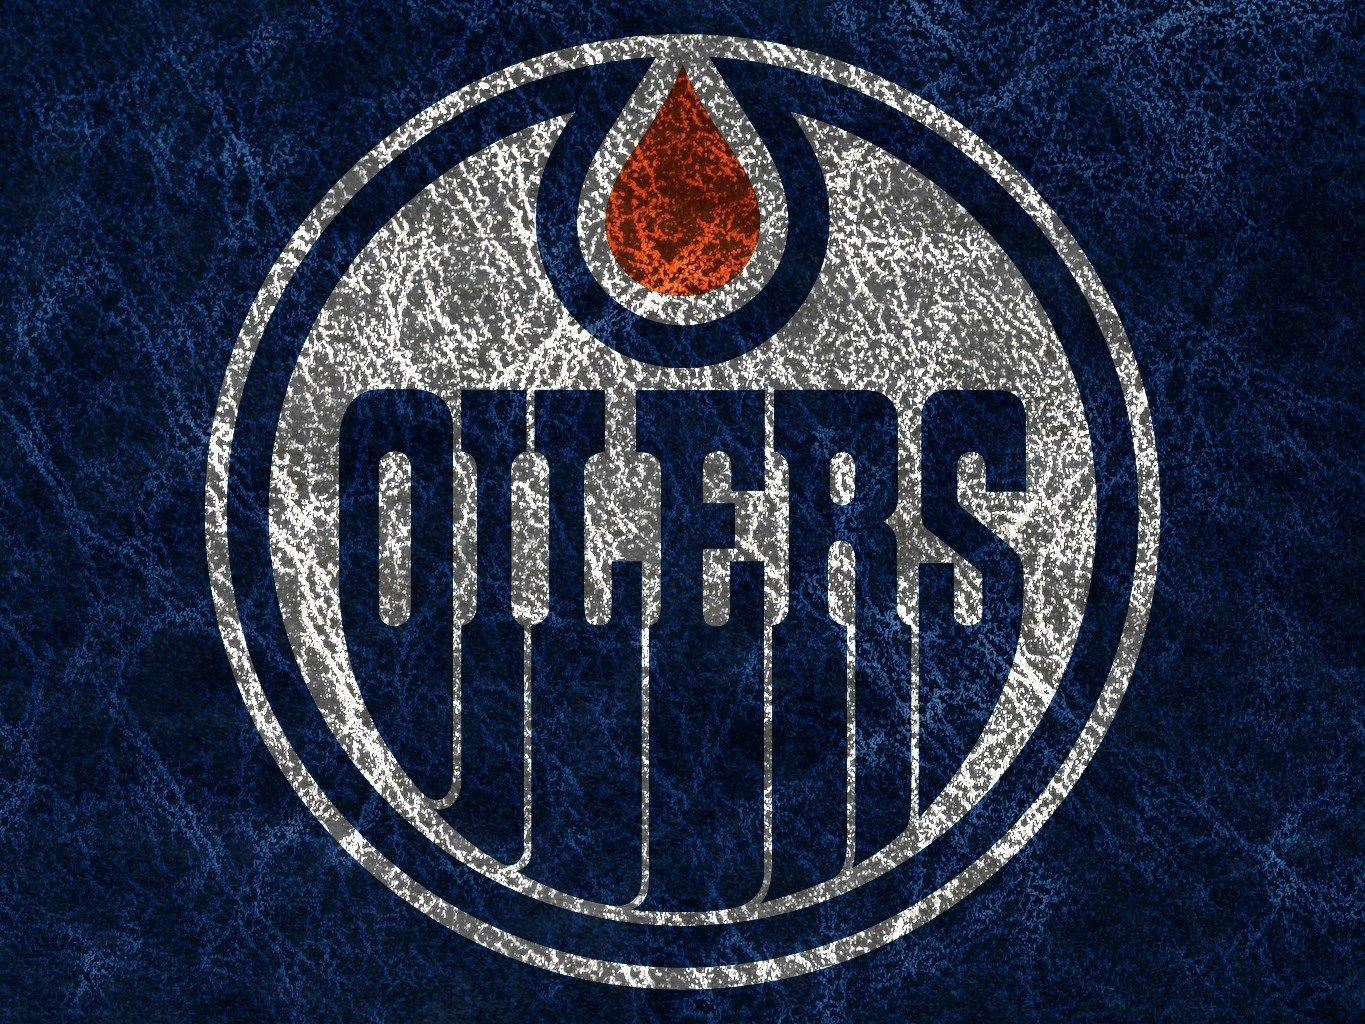 edmonton oilers wallpaper. ololoshenka. NHL and Nhl logos